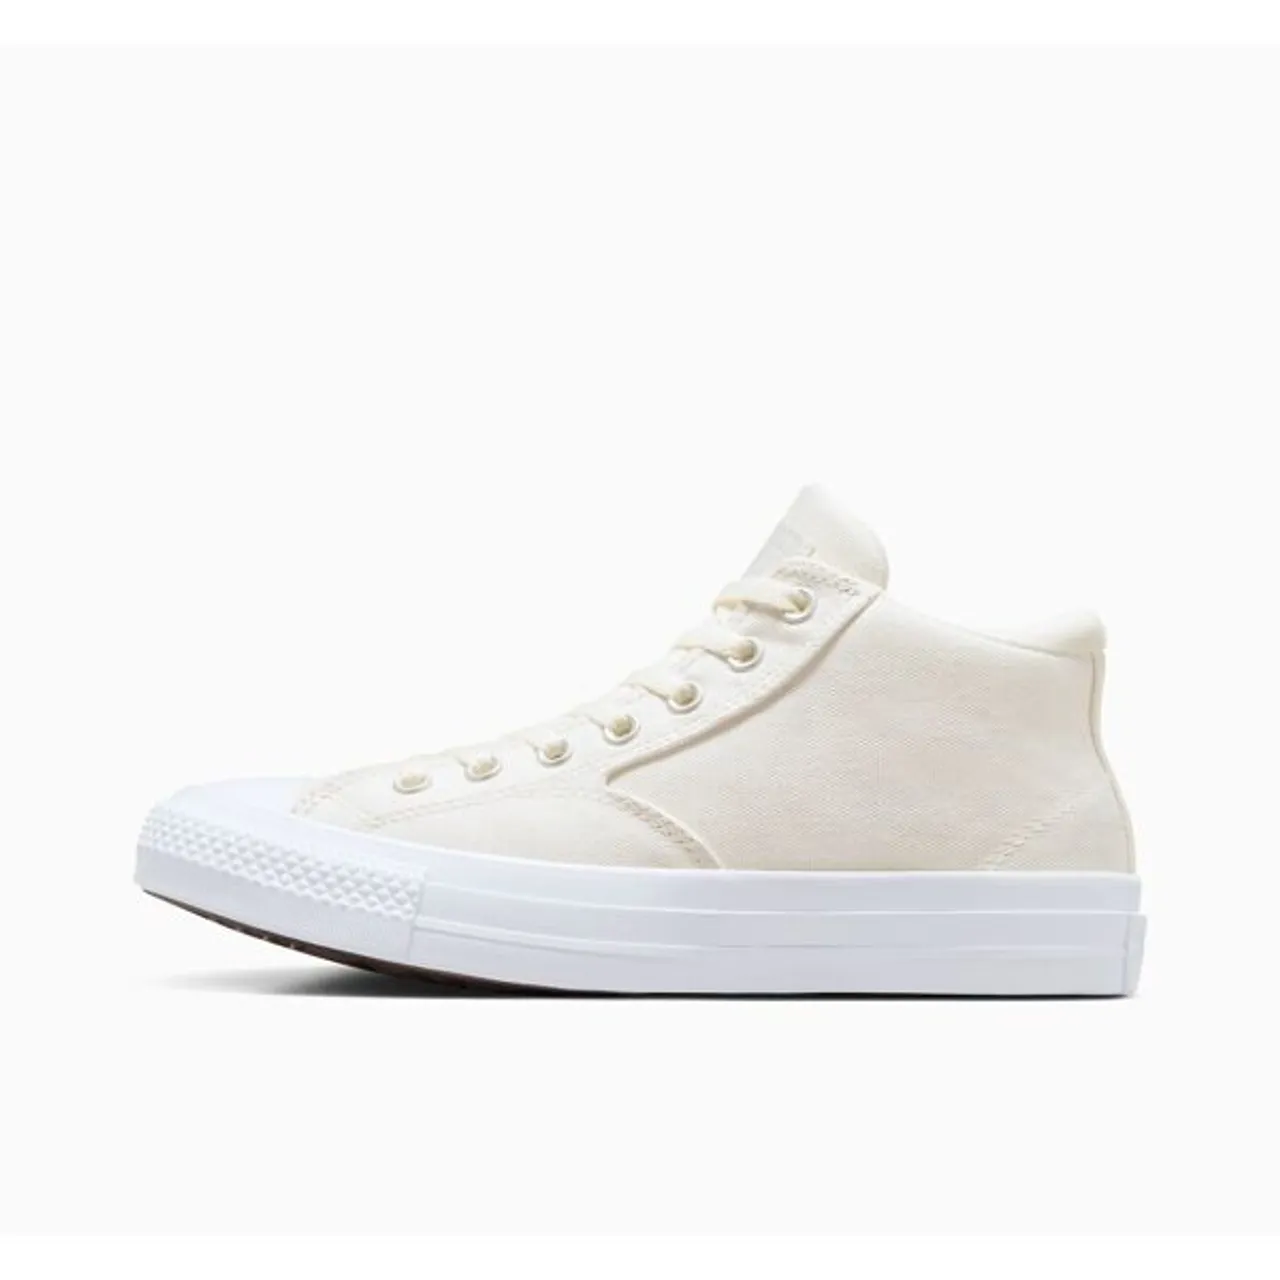 Sneaker CONVERSE "CHUCK TAYLOR ALL STAR MALDEN STREET" Gr. 46, weiß (vintage white) Schuhe Stoffschuhe